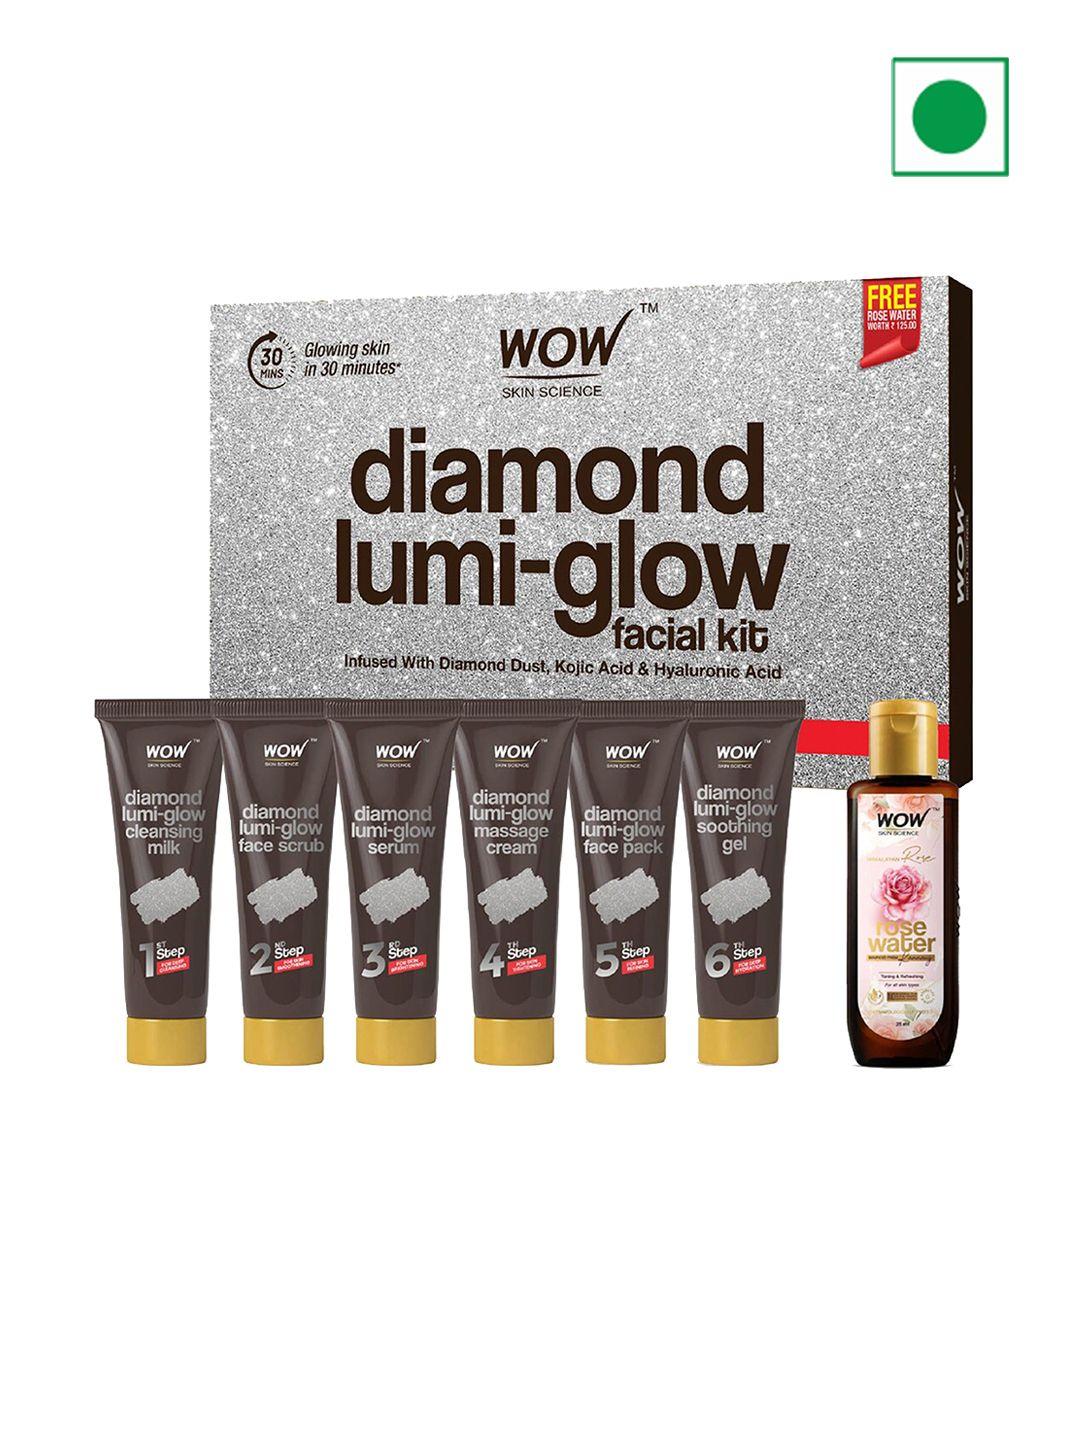 wow skin science diamond lumi-glow facial kit with kojic acid & hyaluronic acid - 85 ml